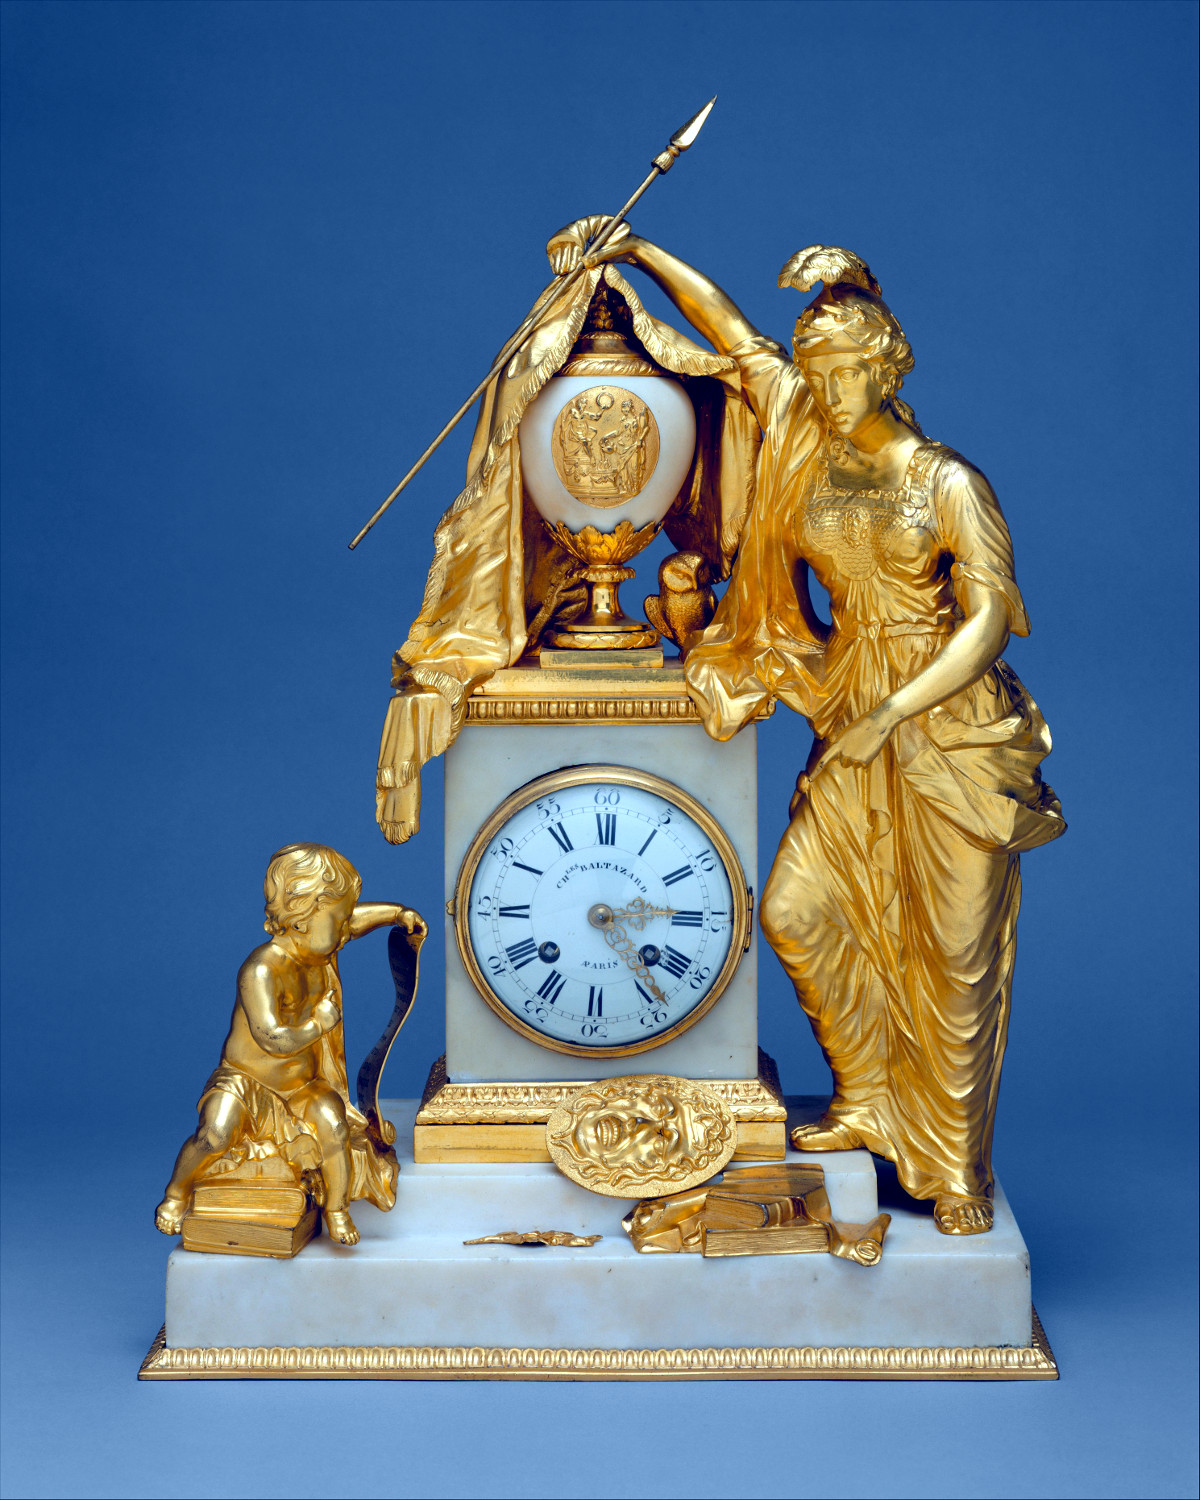 1770. Clock case, Matthew Boulton. Credit metmuseum.org